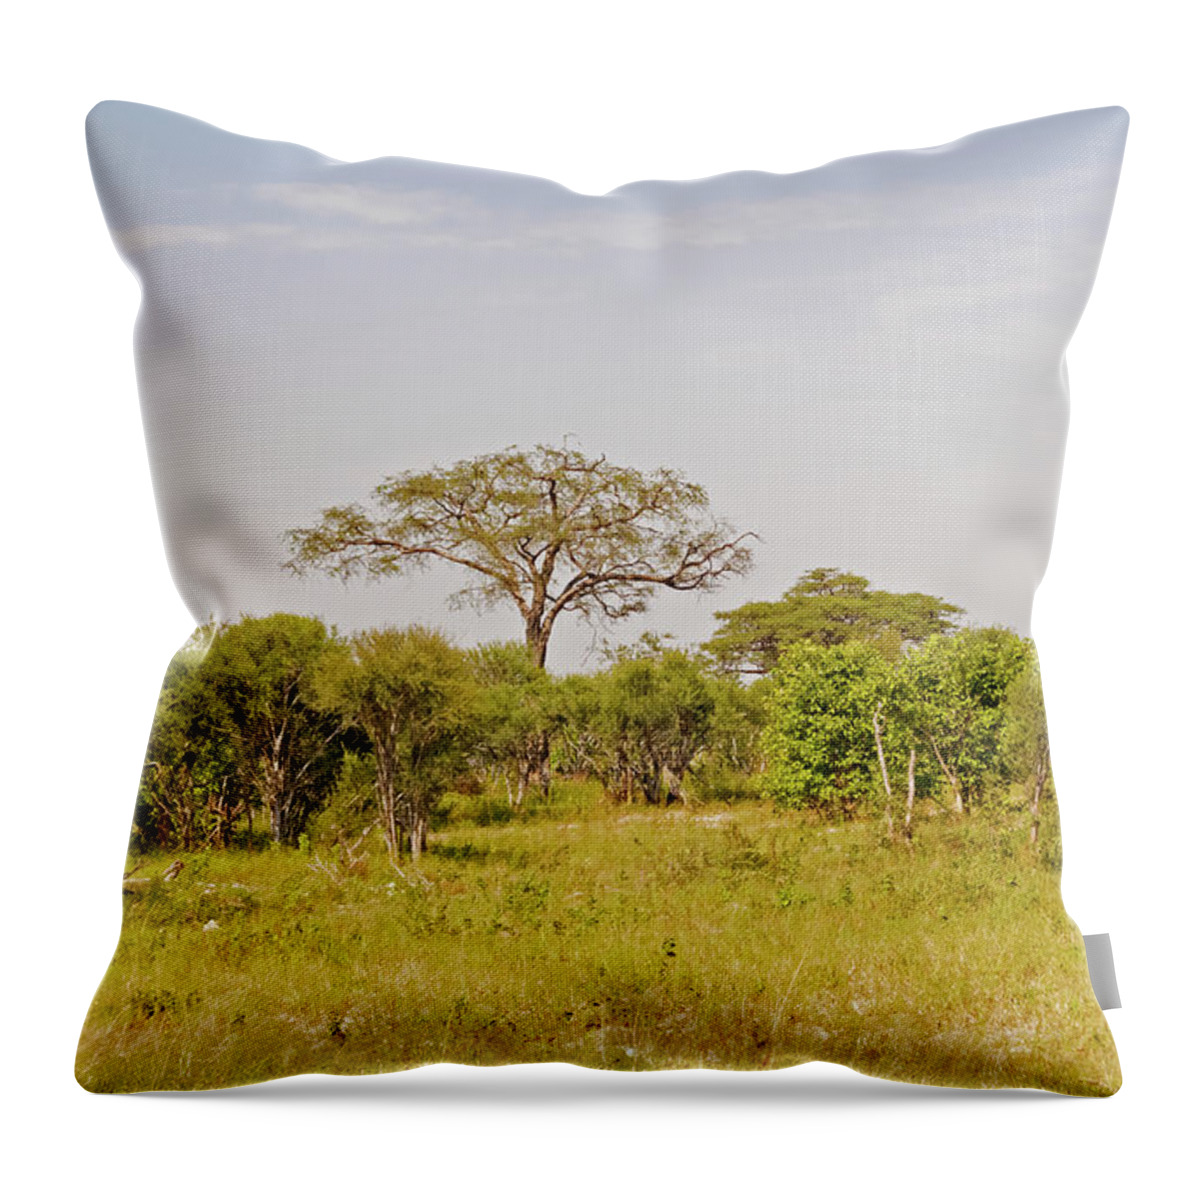 Botswana Throw Pillow featuring the photograph Landscape in Botswana by Marek Poplawski